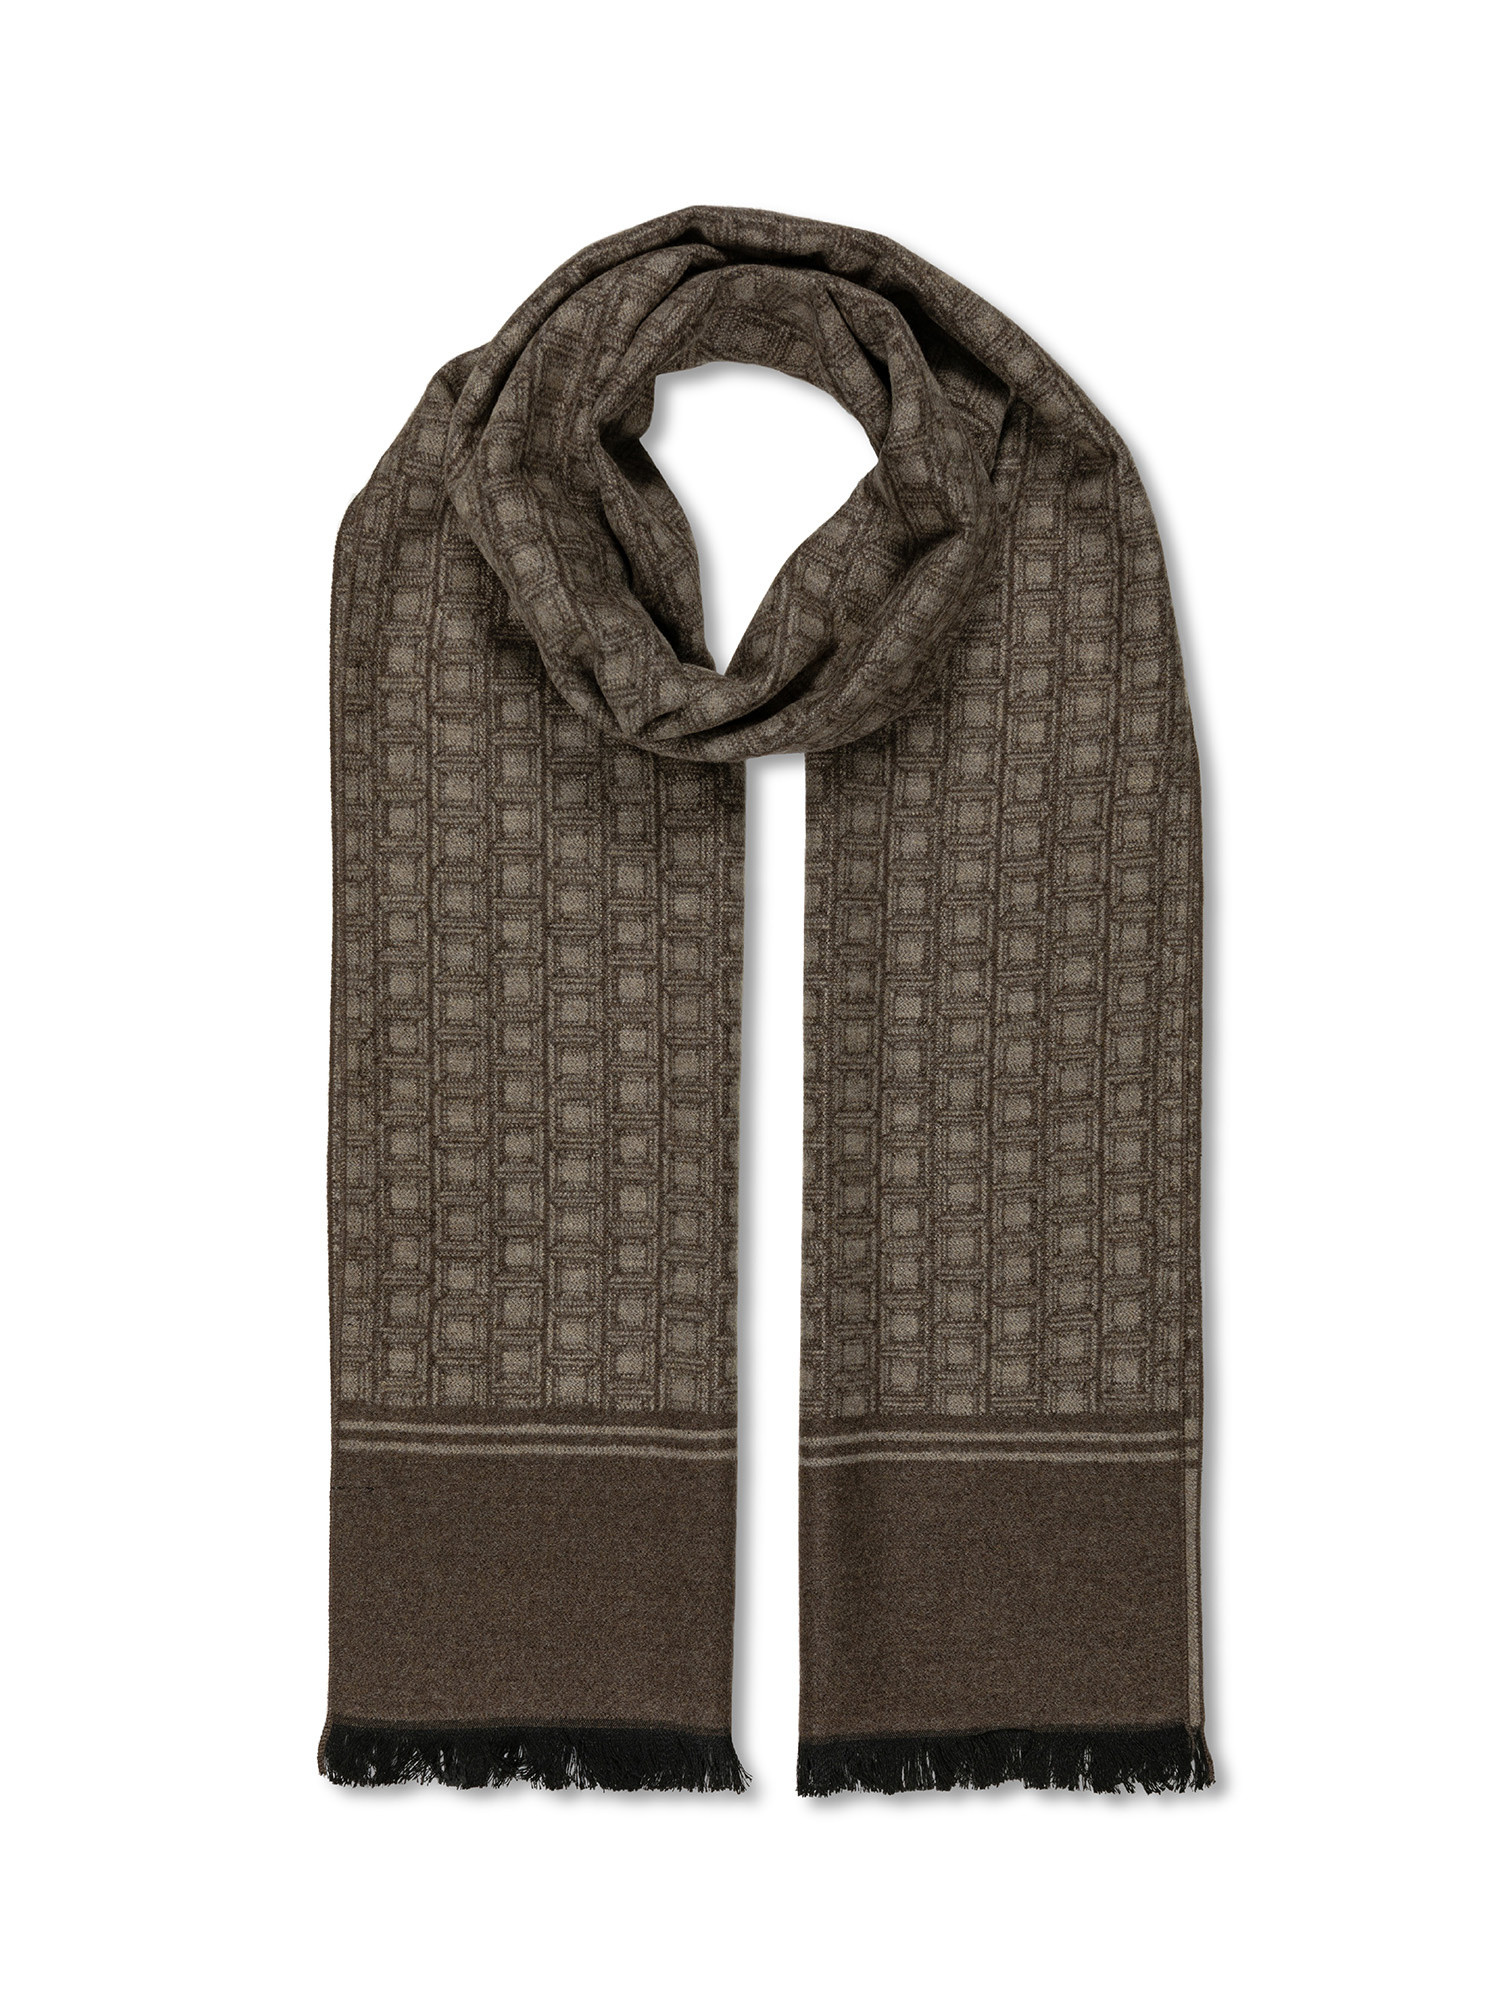 Luca D'Altieri - Patterned scarf, Beige, large image number 0